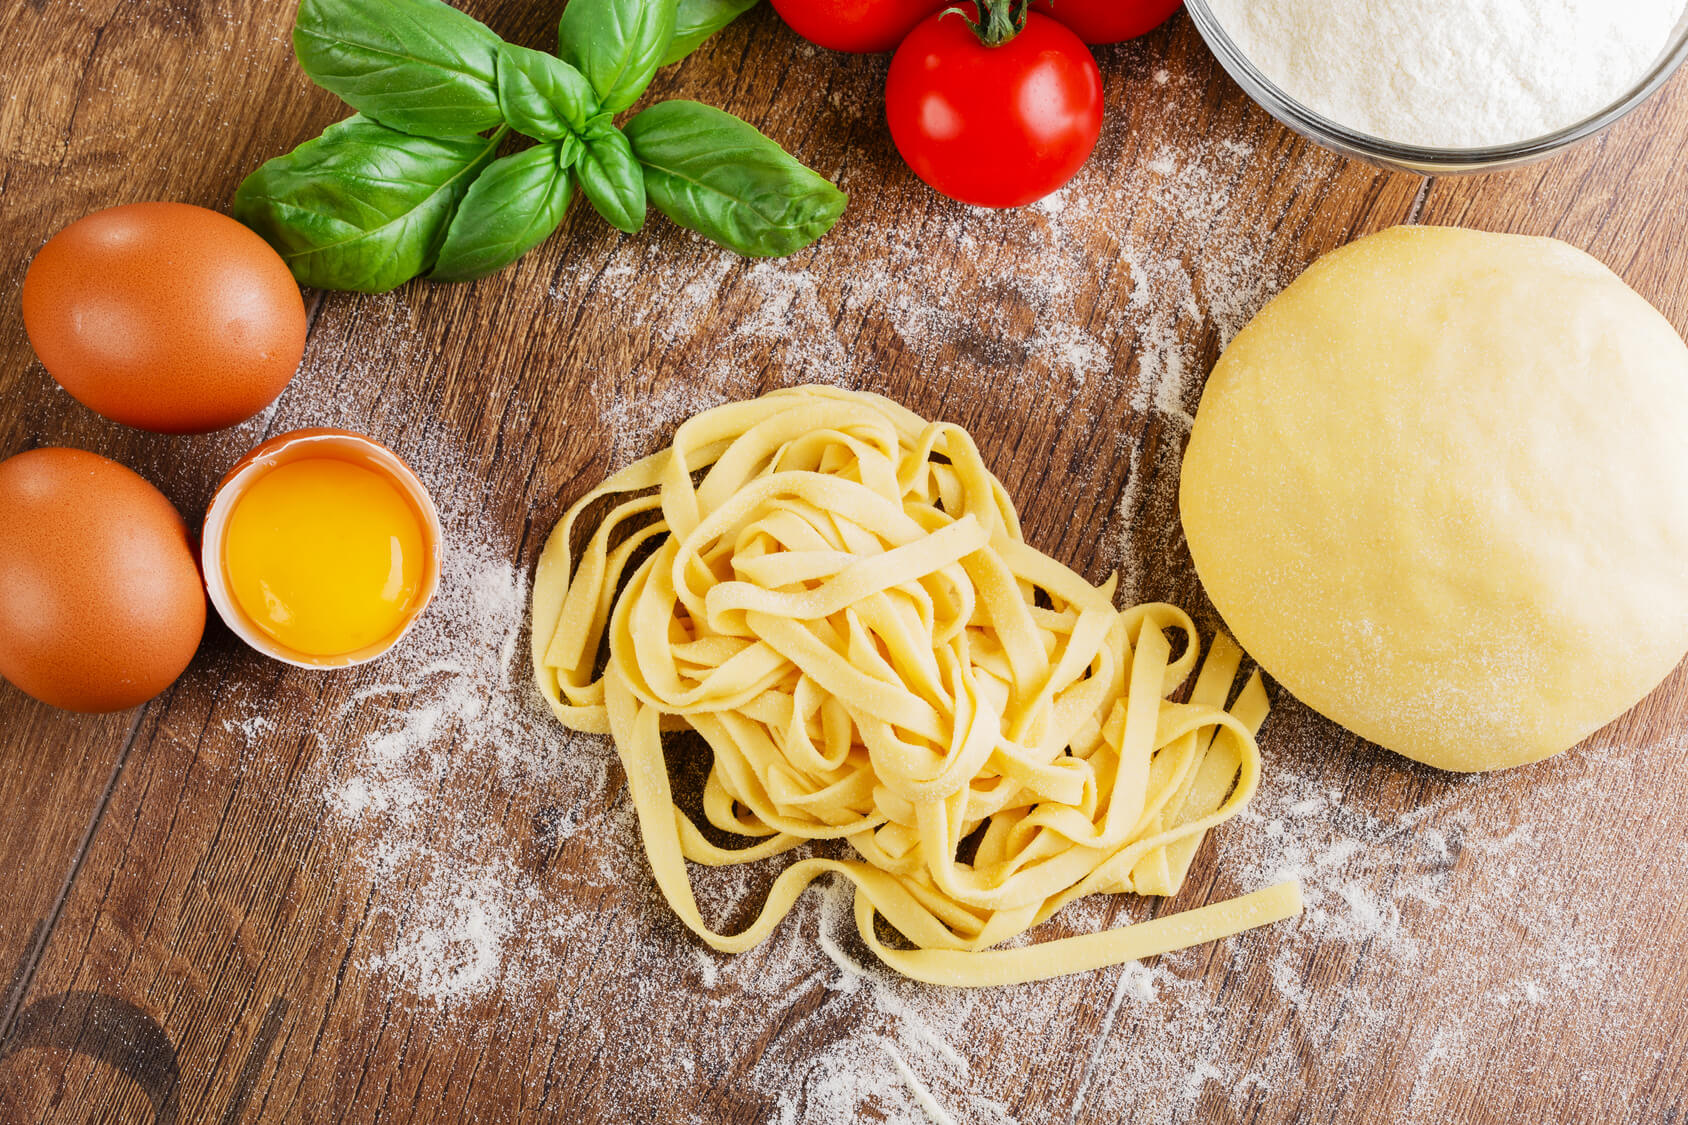 Спагетти польза и вред. разновидности классических спагетти | здоровье человека